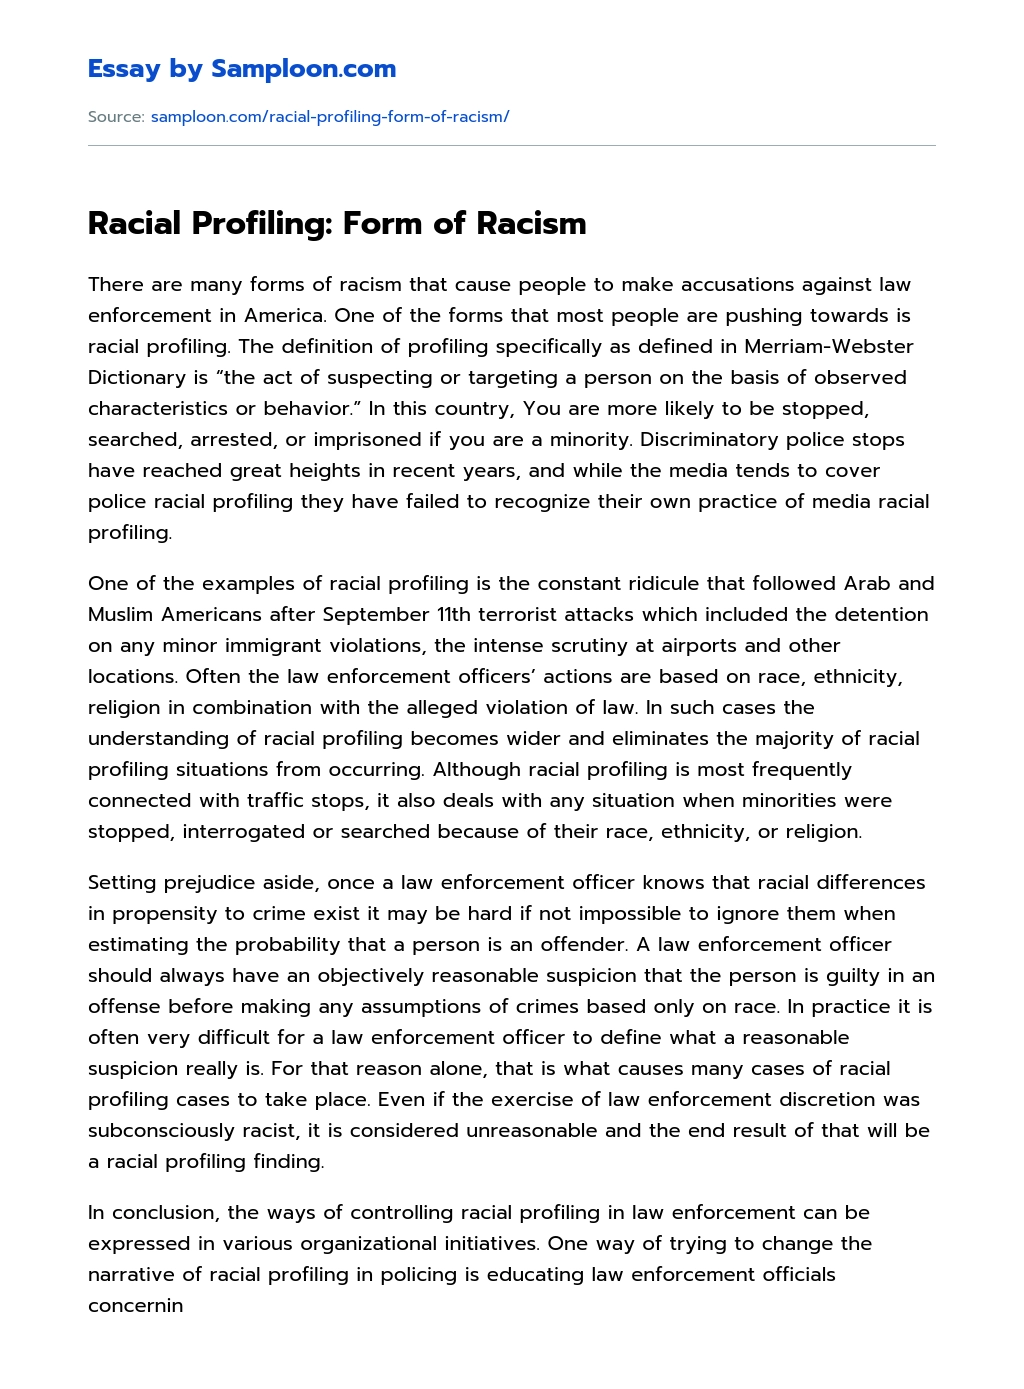 Racial Profiling: Form of Racism essay